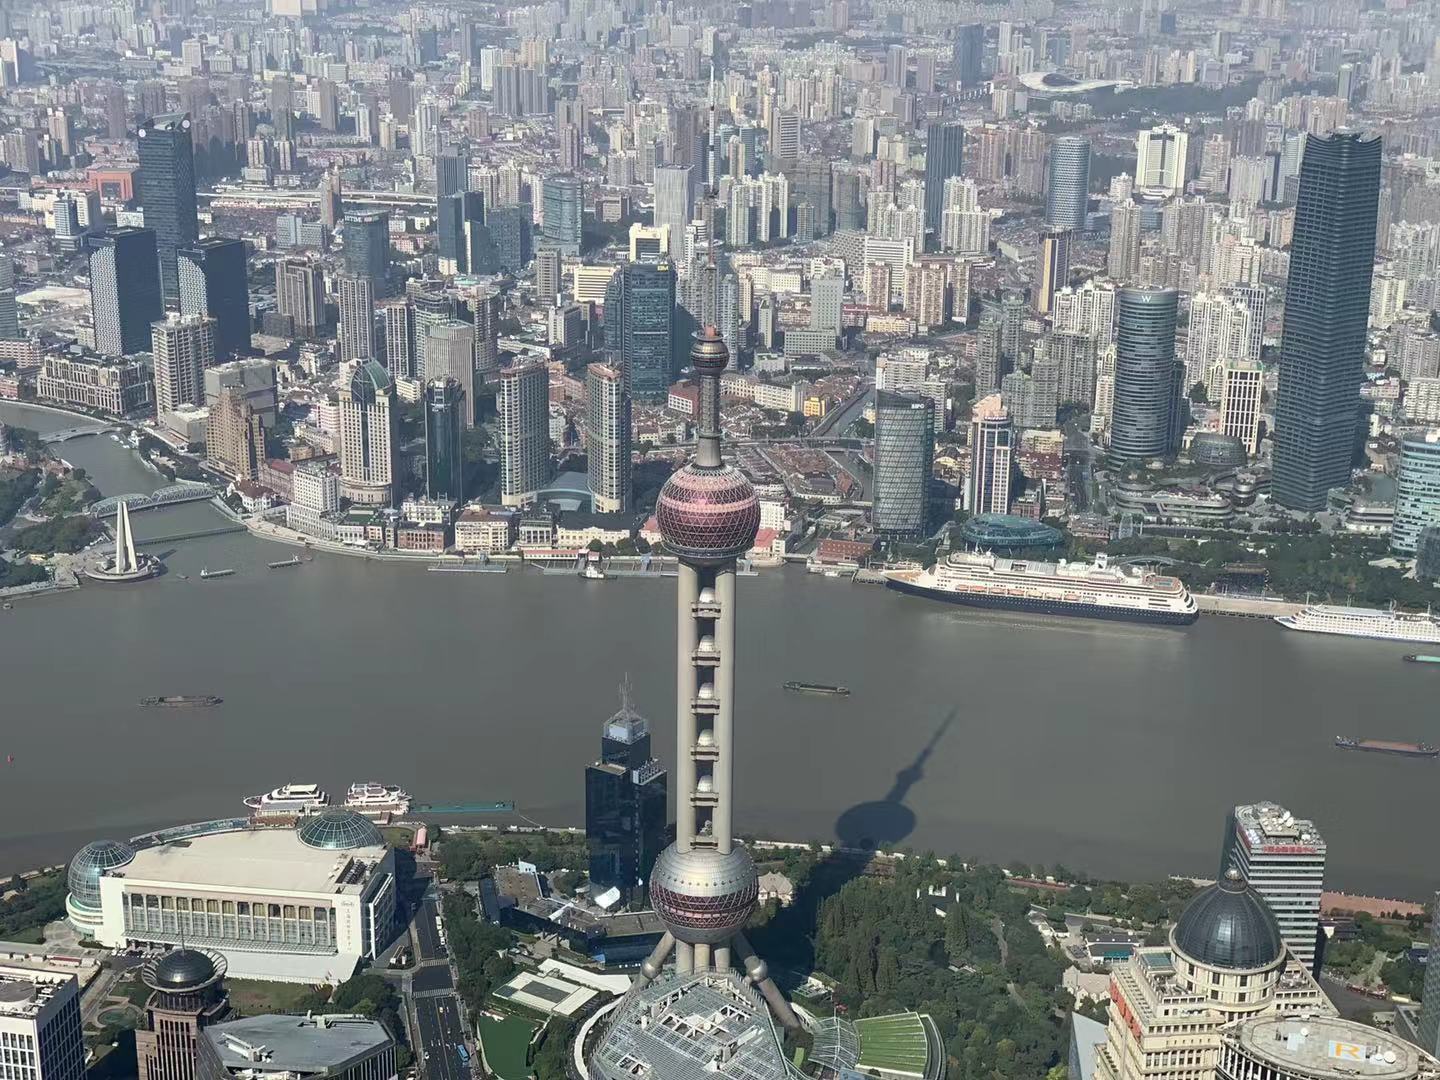 上海タワー(上海中心大厦)